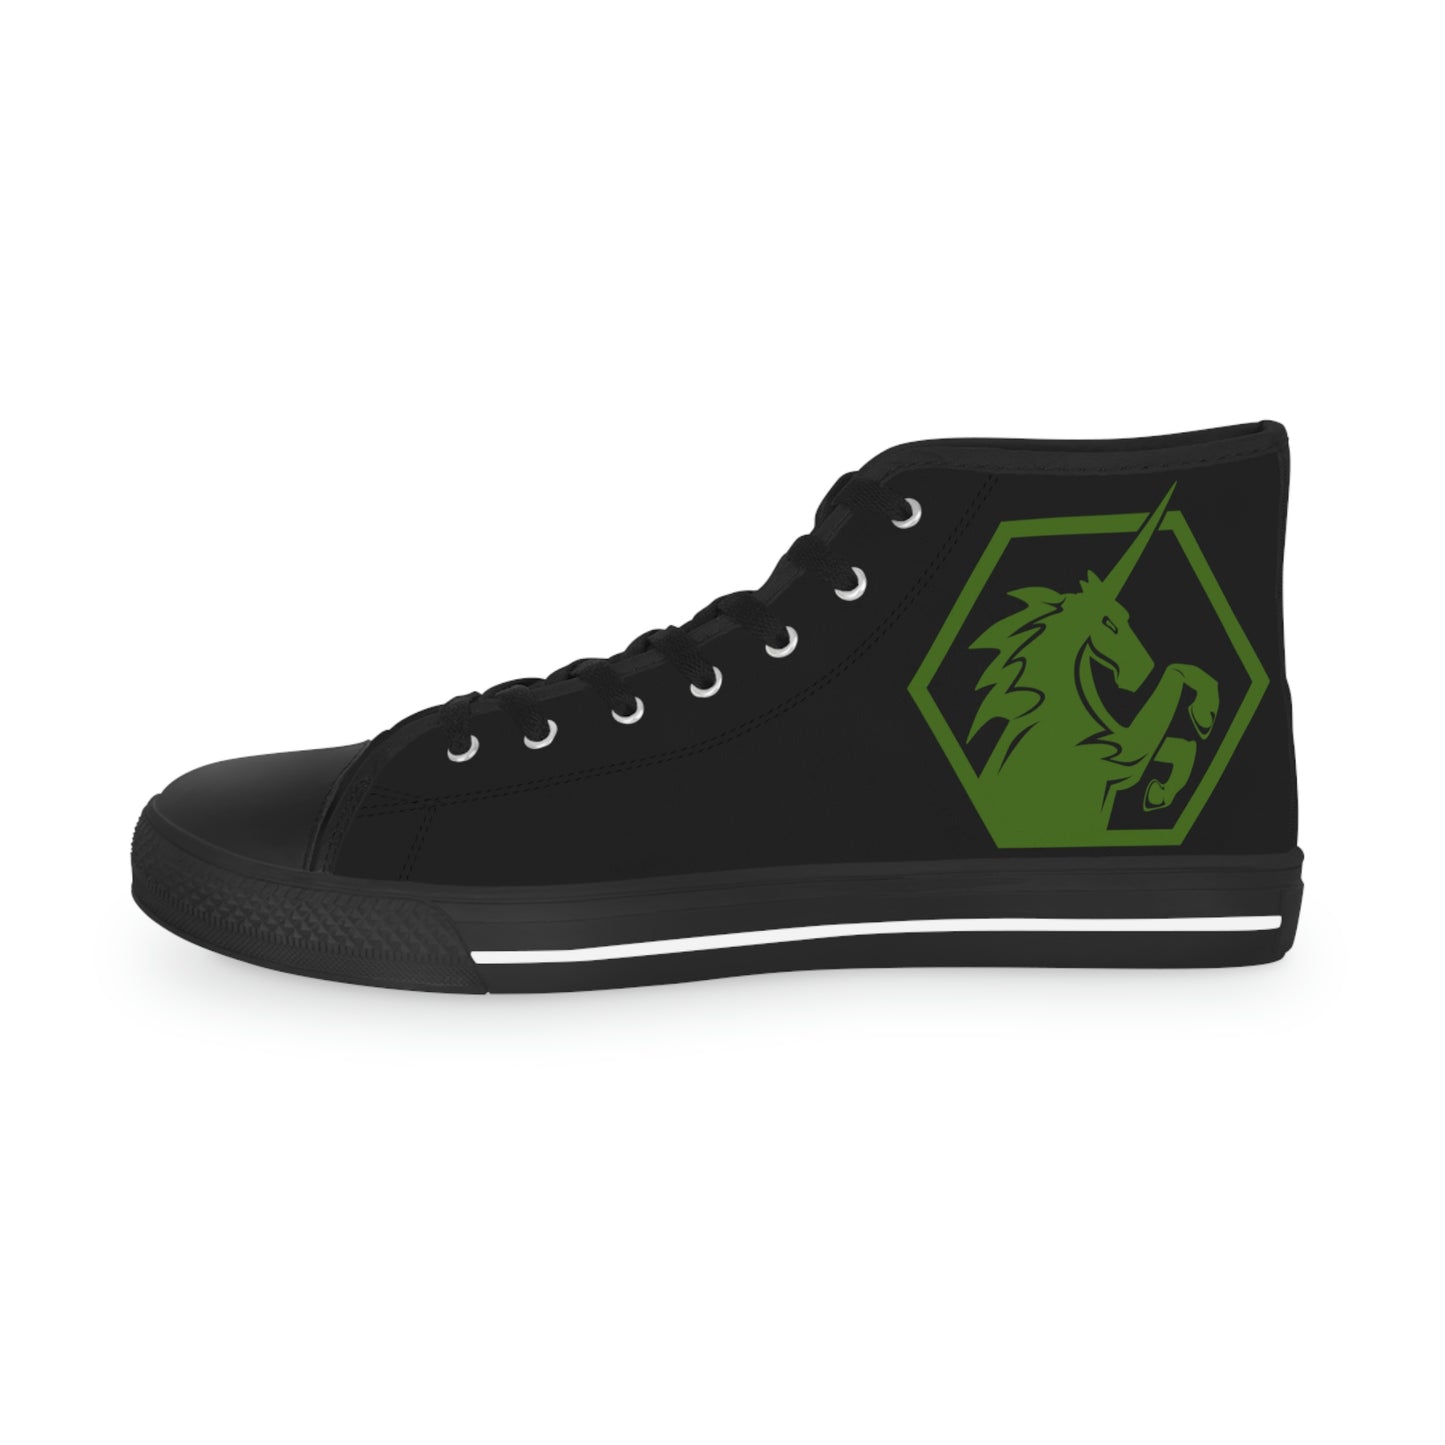 Black w/OD Green High Top Sneakers